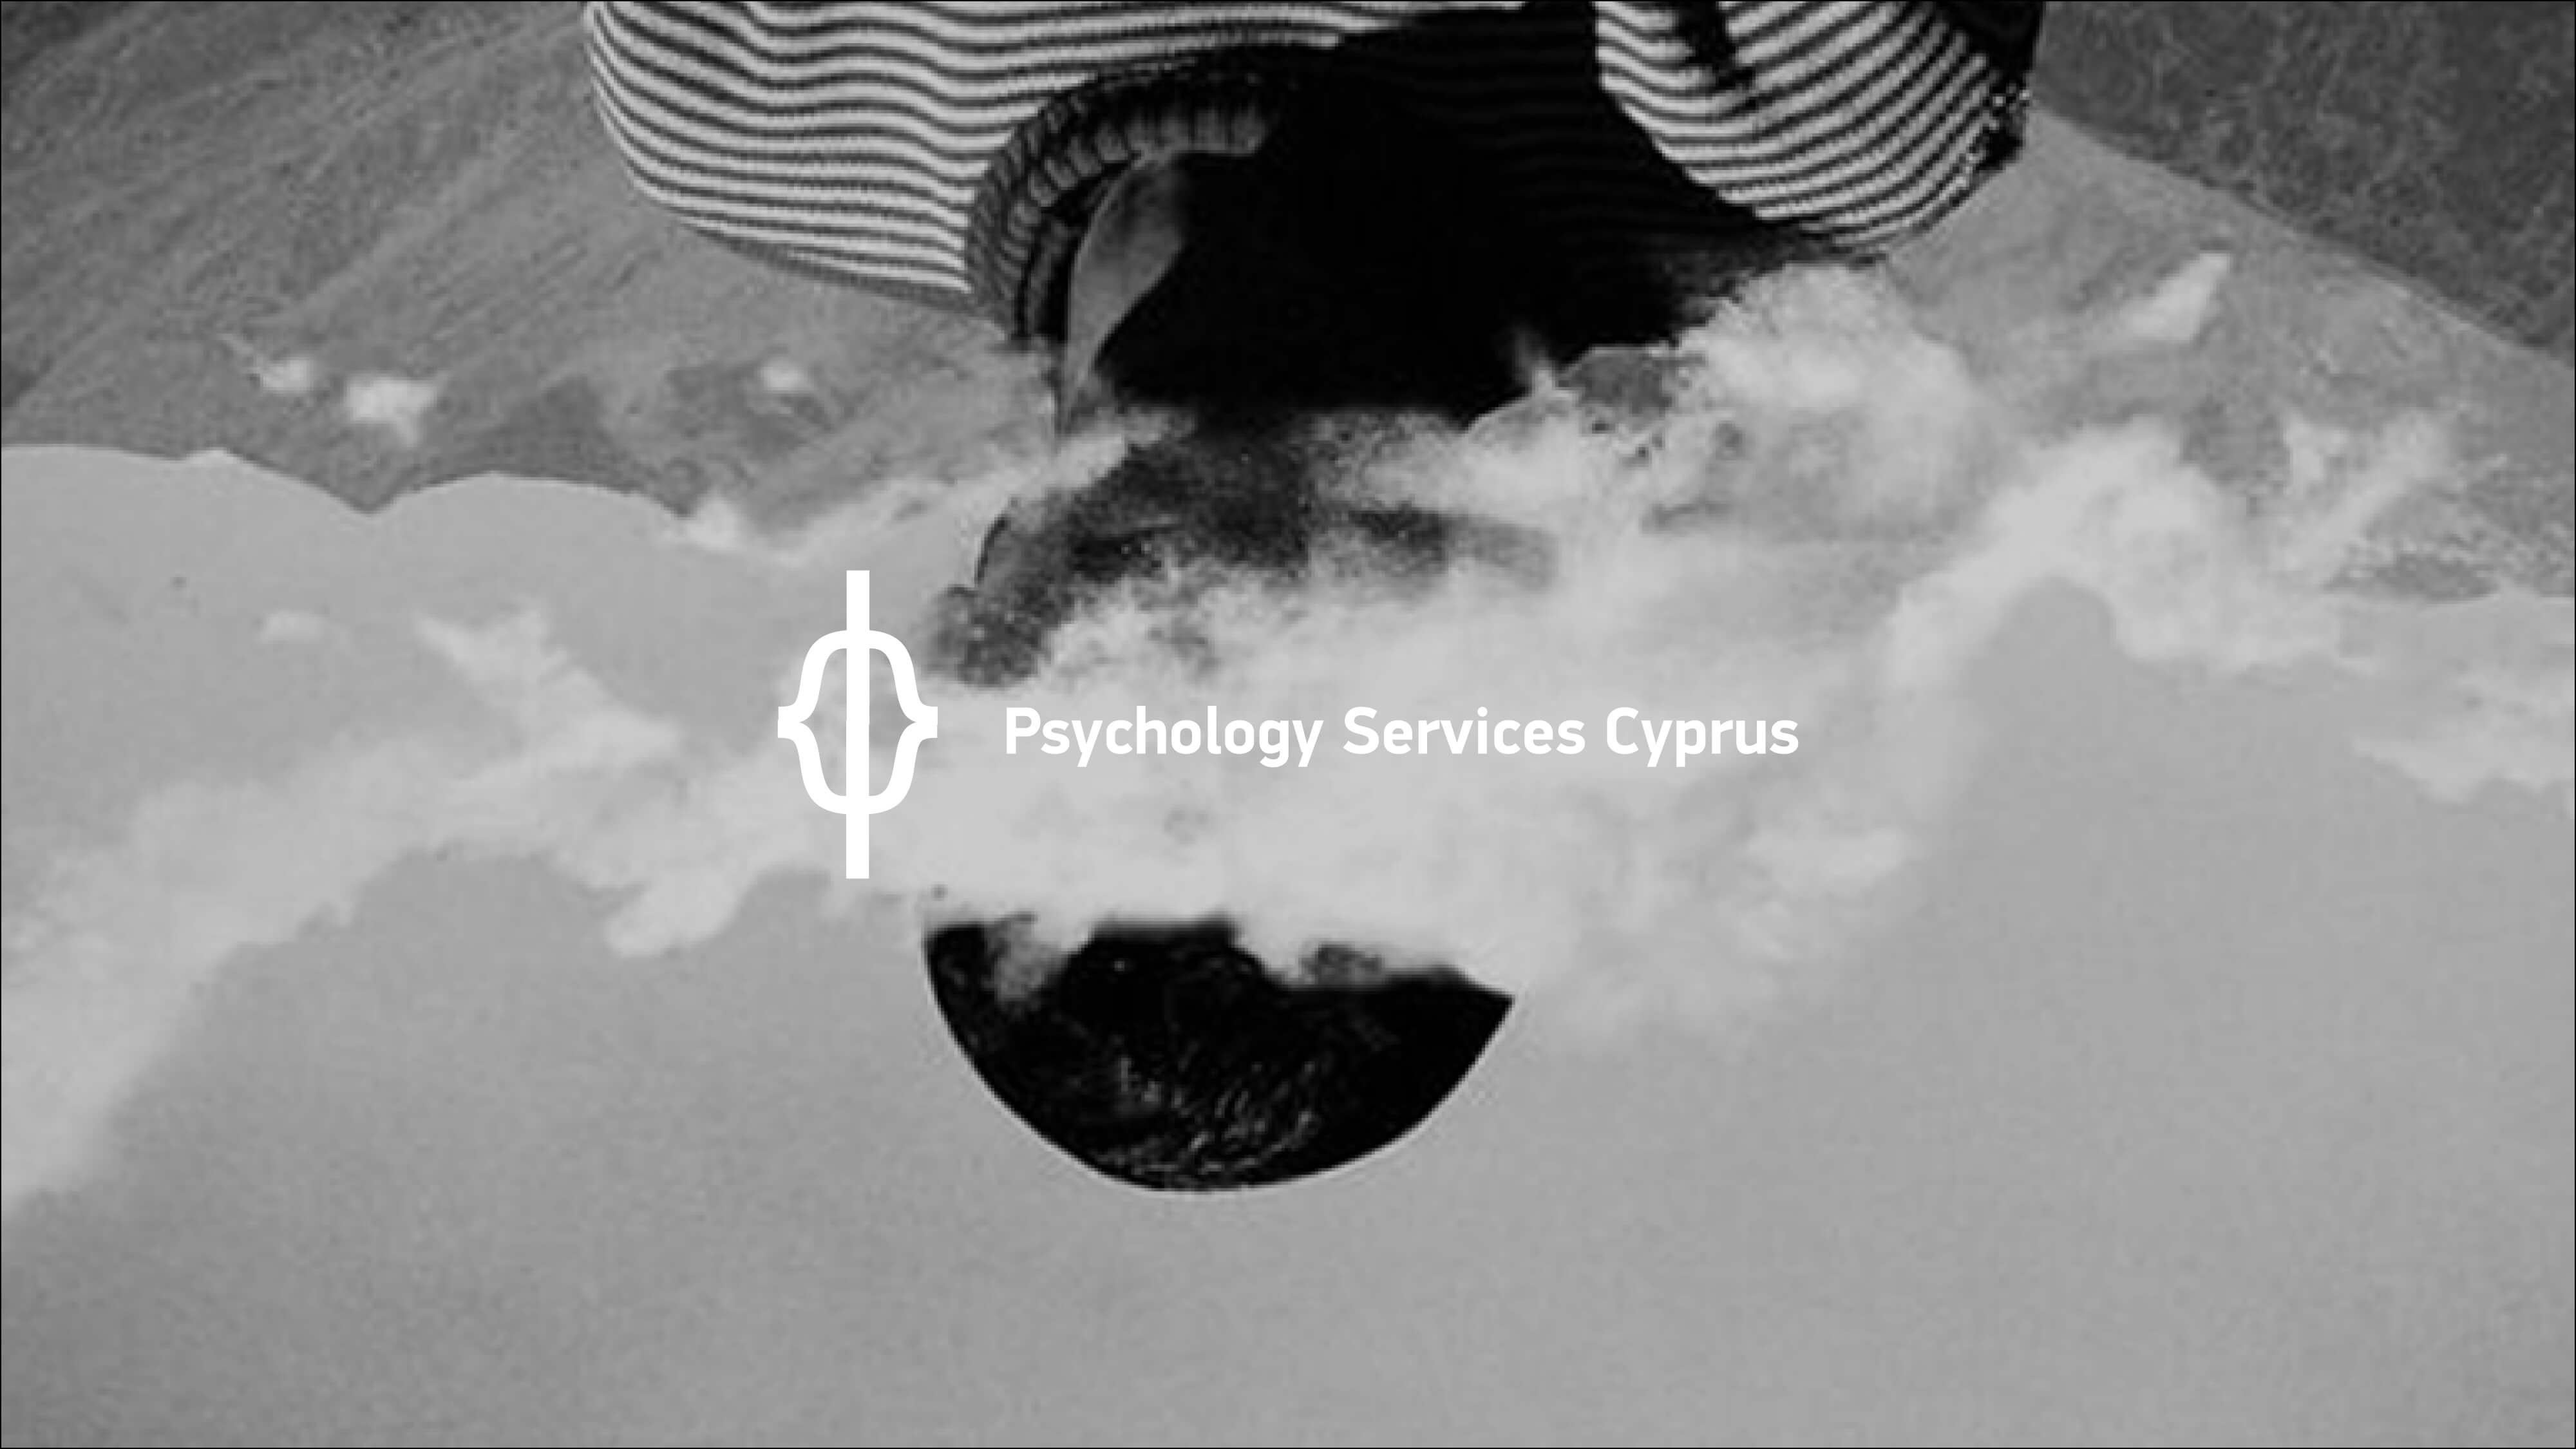 PSYCHOLOGY SERVICES CYPRUS